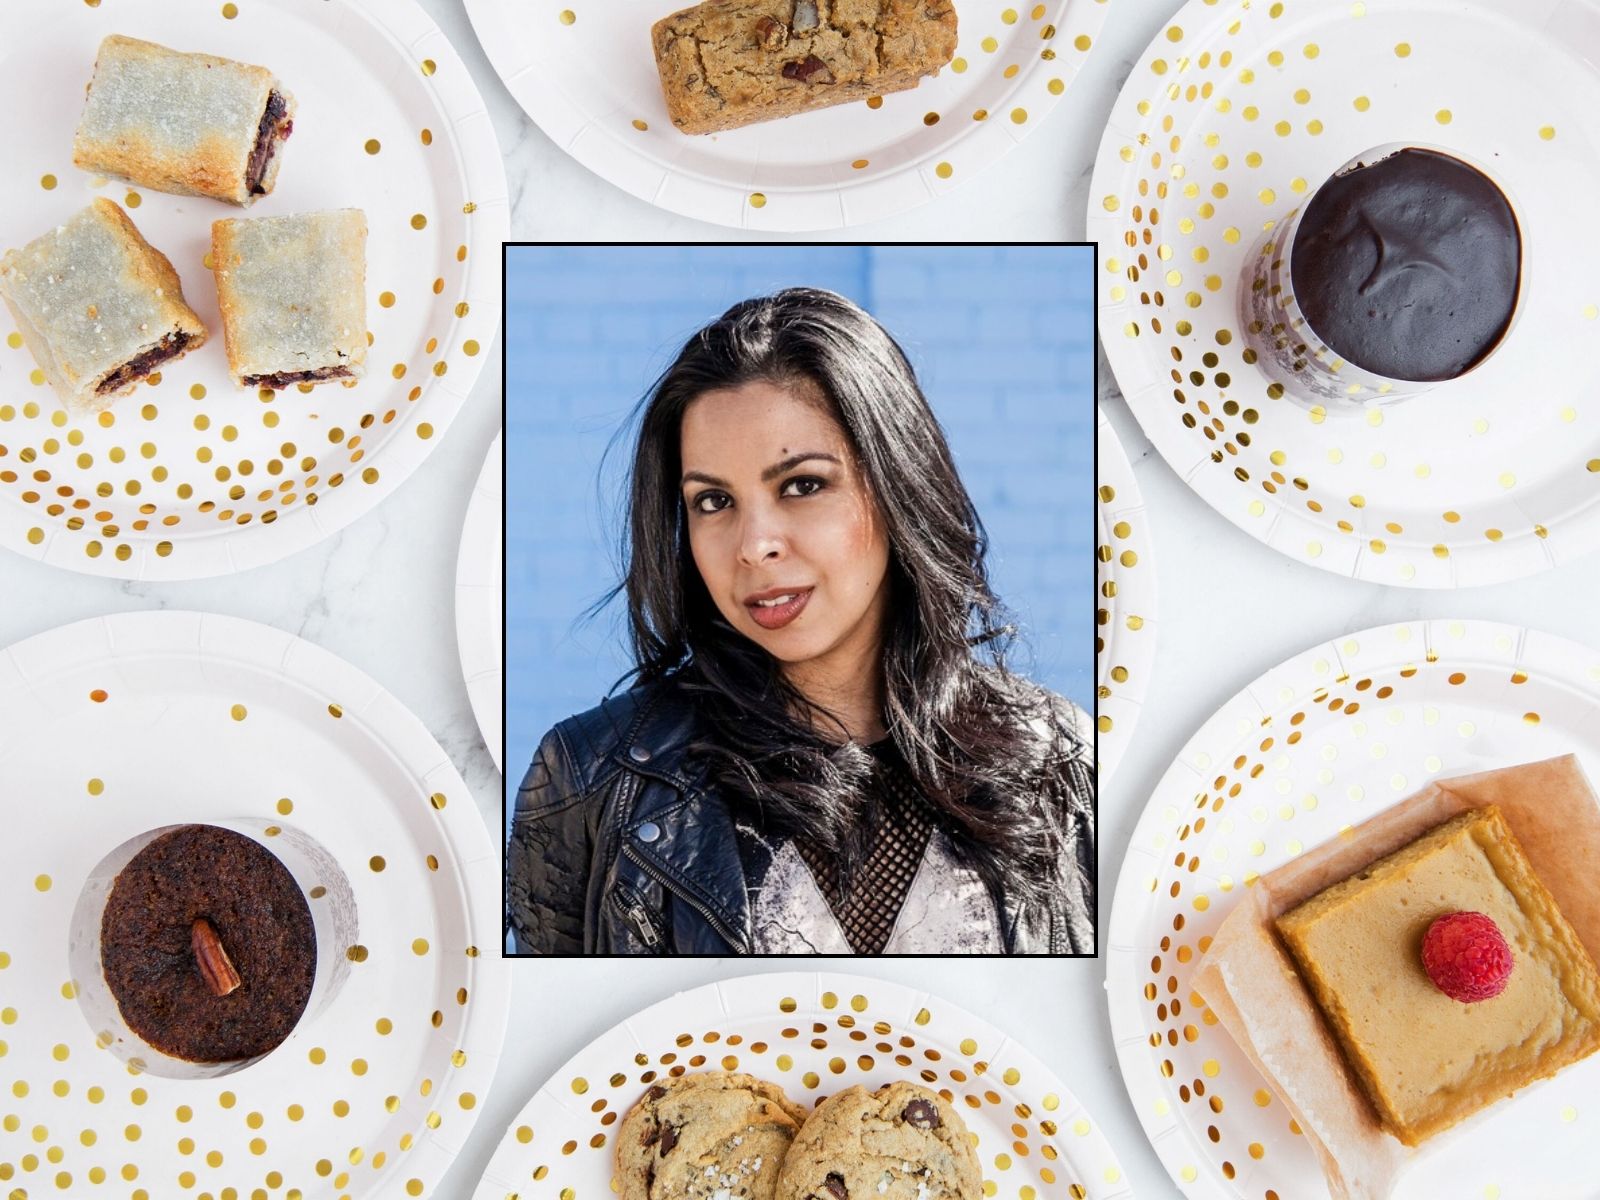 Nourishing Sweets: Meet the Founder of Elisa’s Love Bites